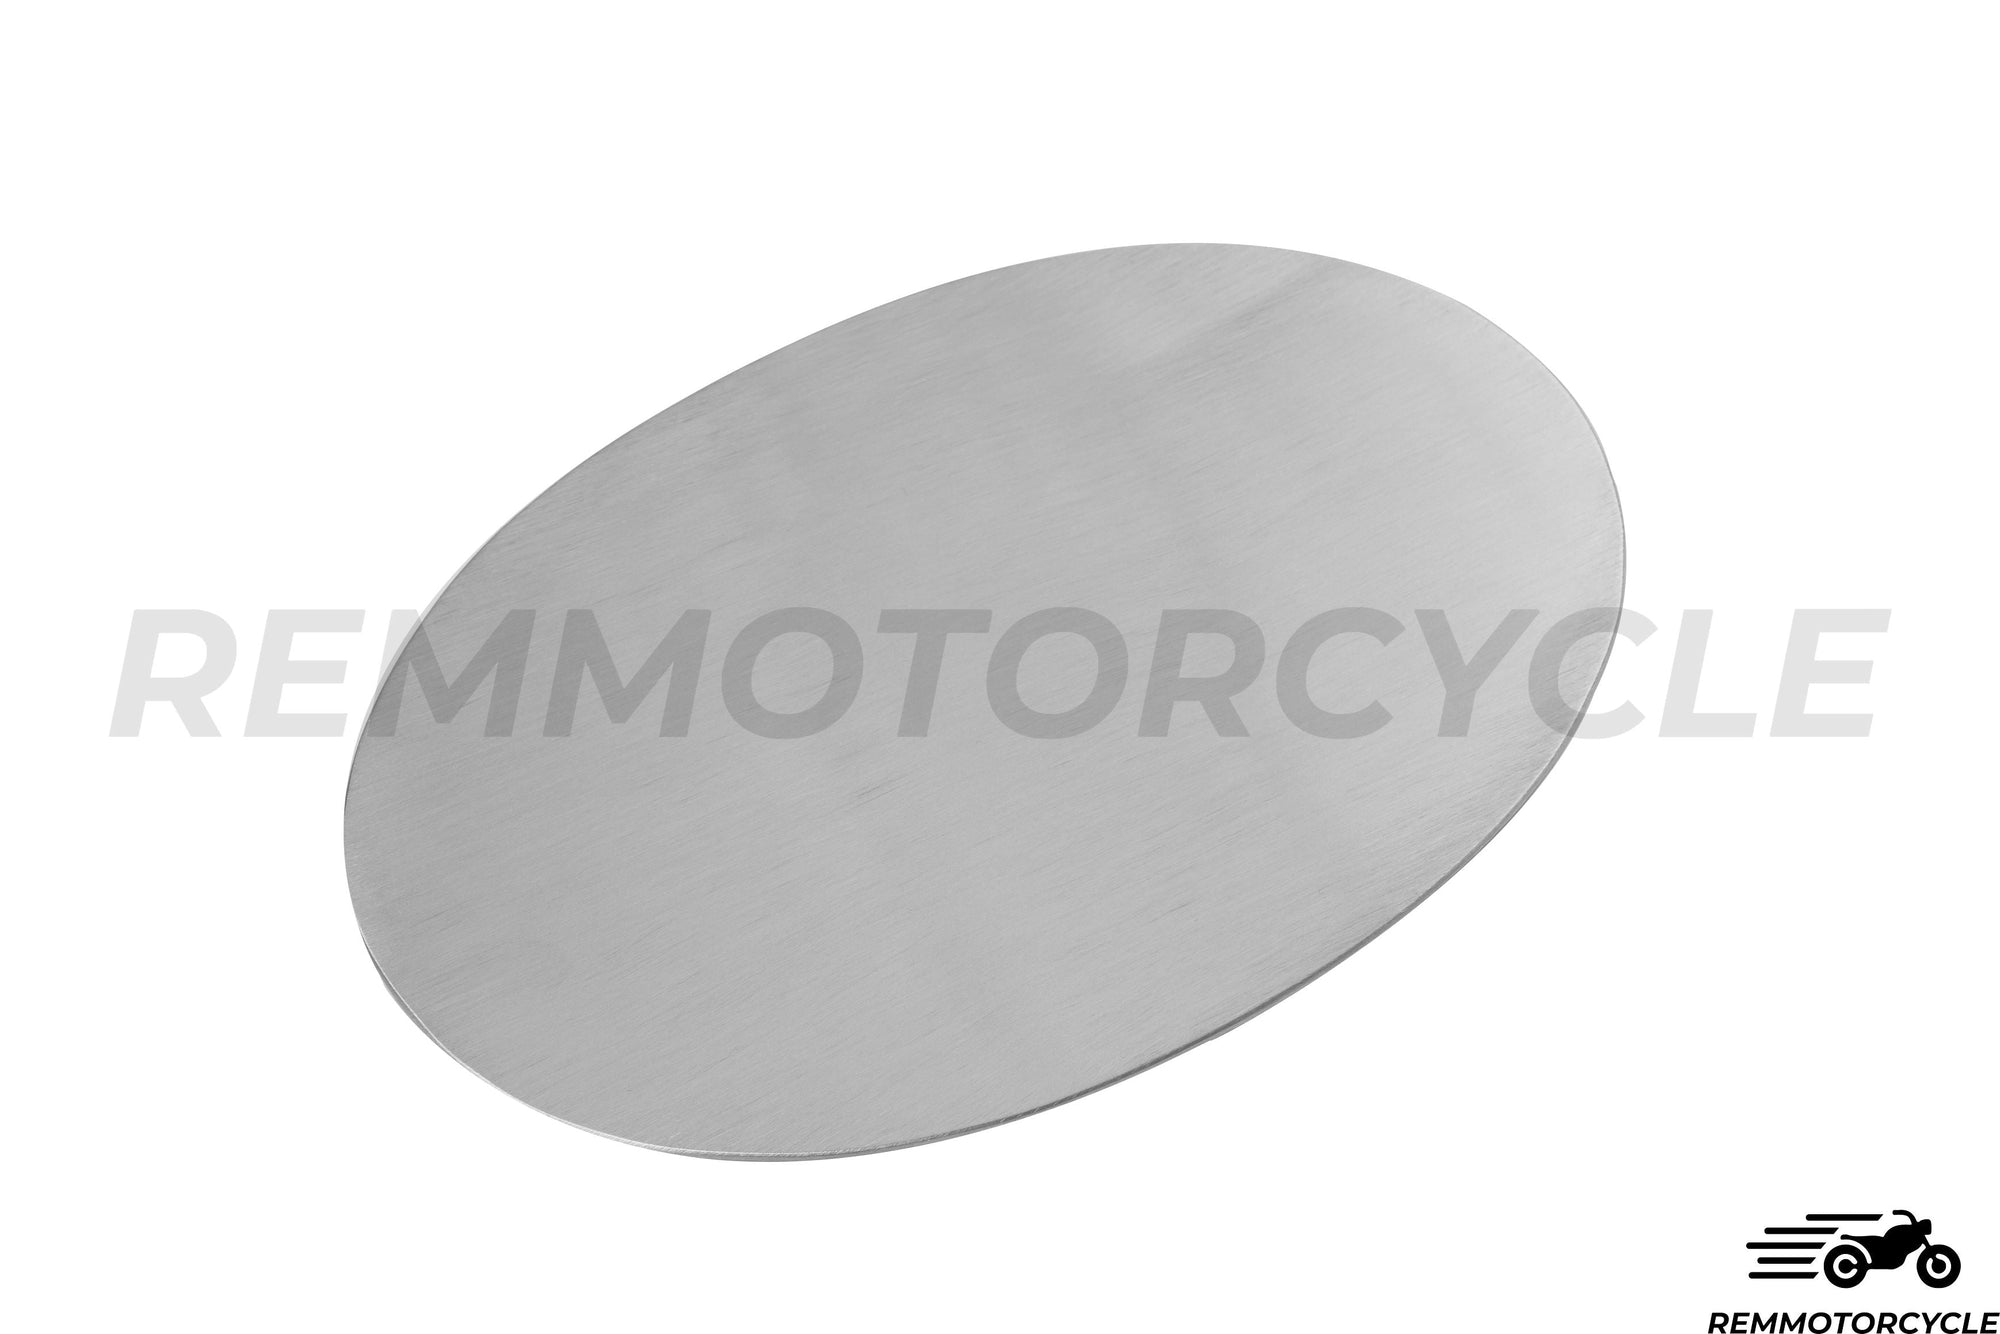 Oval aluminum side plate